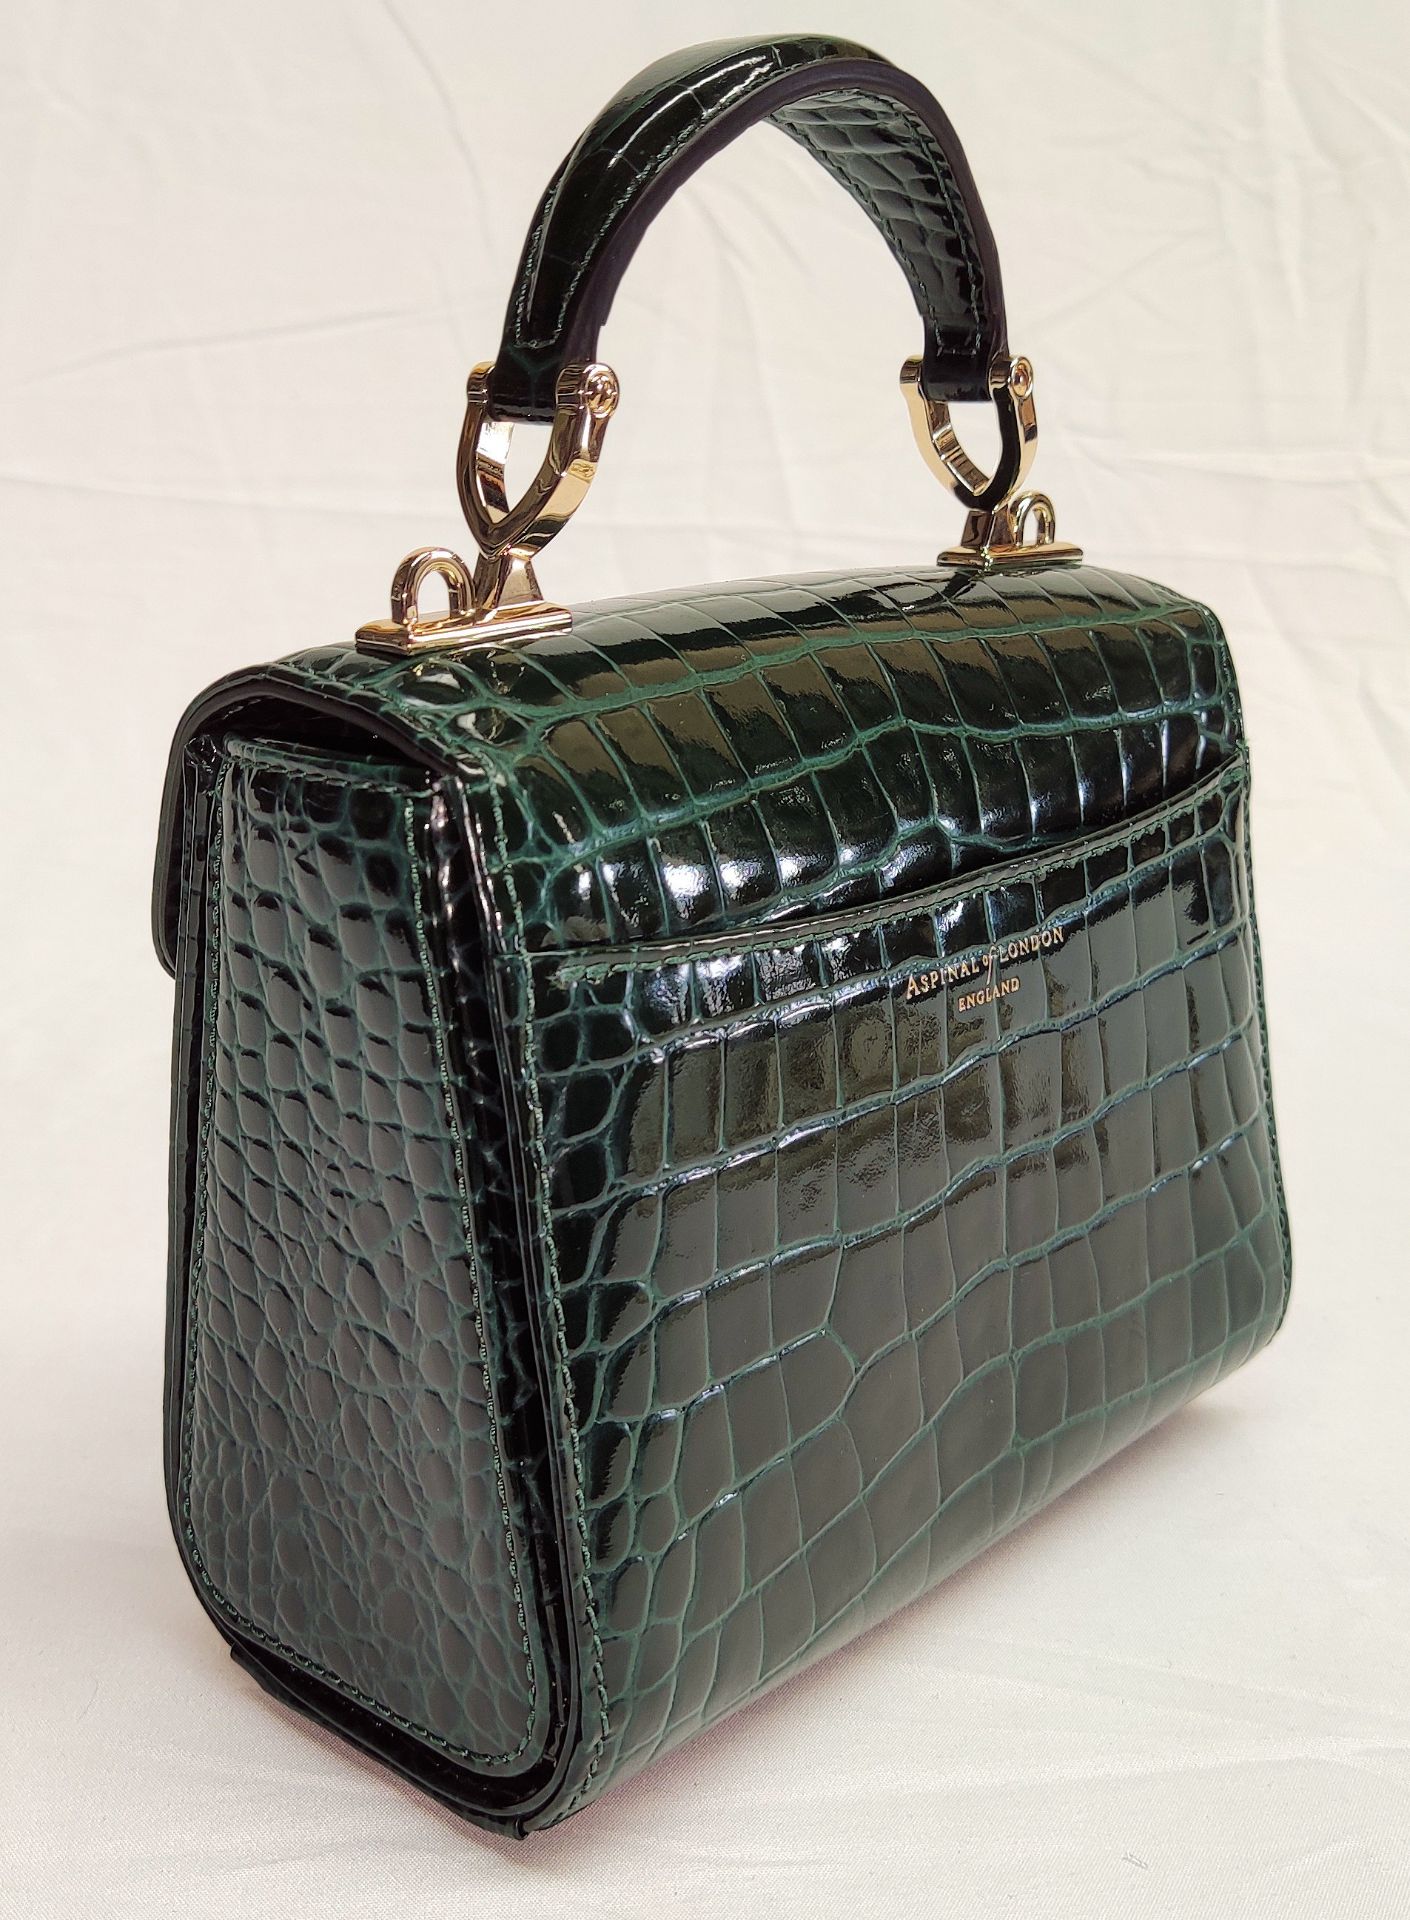 1 x ASPINAL OF LONDON Mayfair Mini Bag - Evergreen Patent Croc - Boxed - Original RRP £495 - Ref: - Image 6 of 21